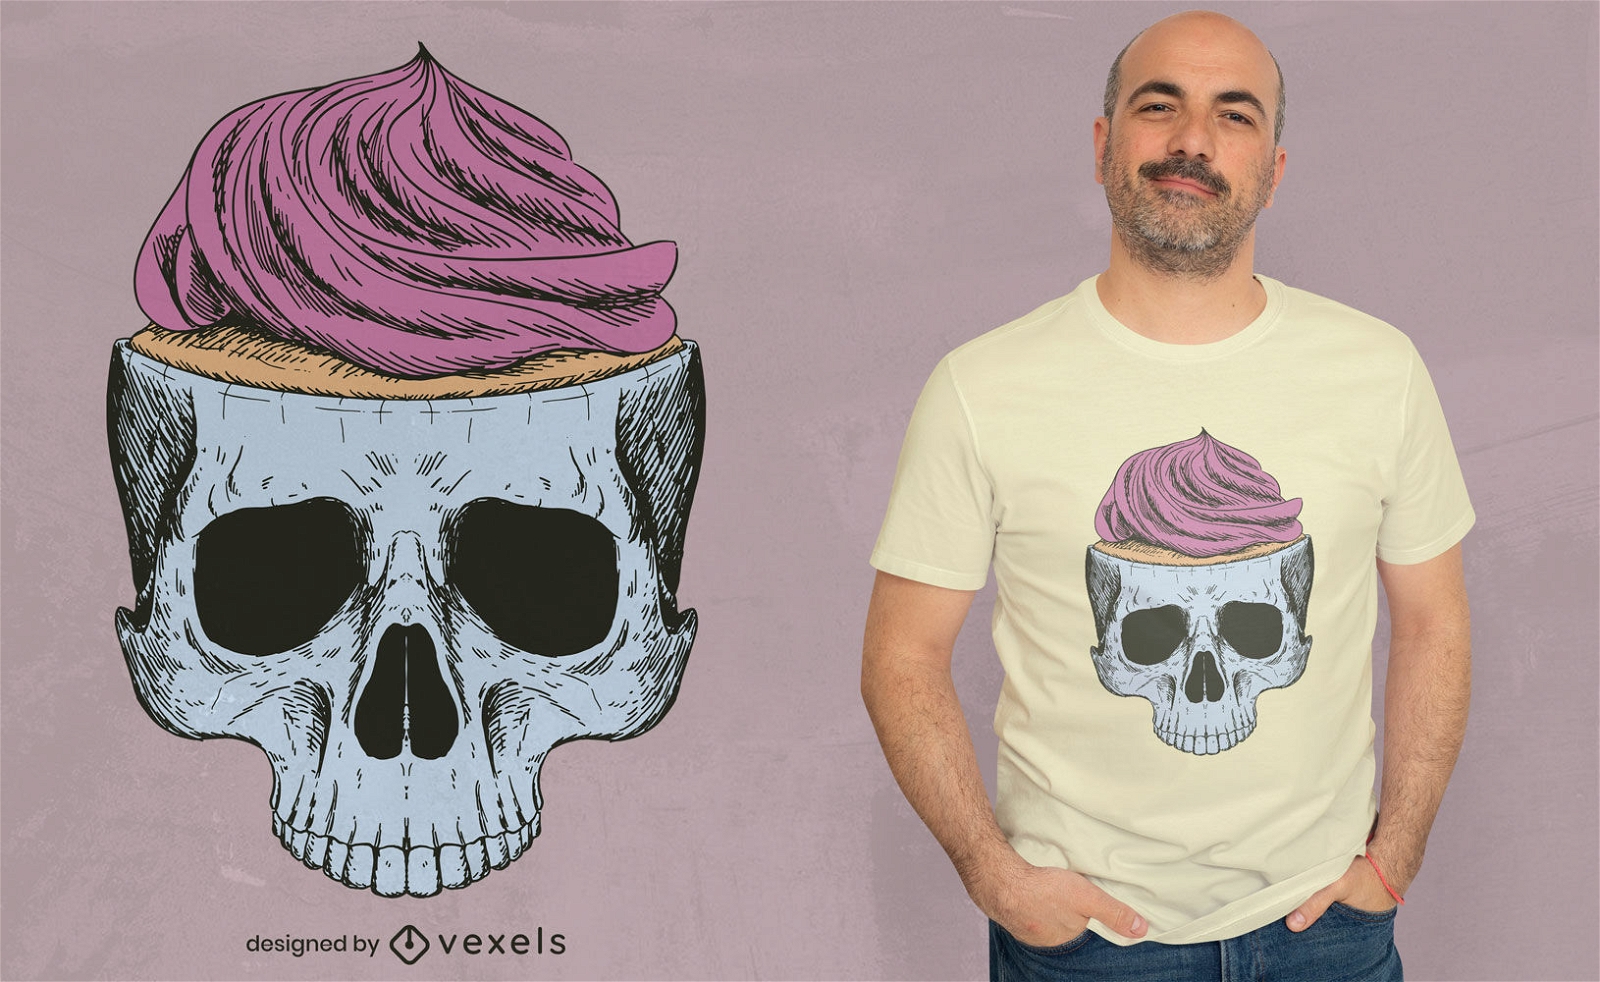 Cupcake-Sch?del-T-Shirt-Design